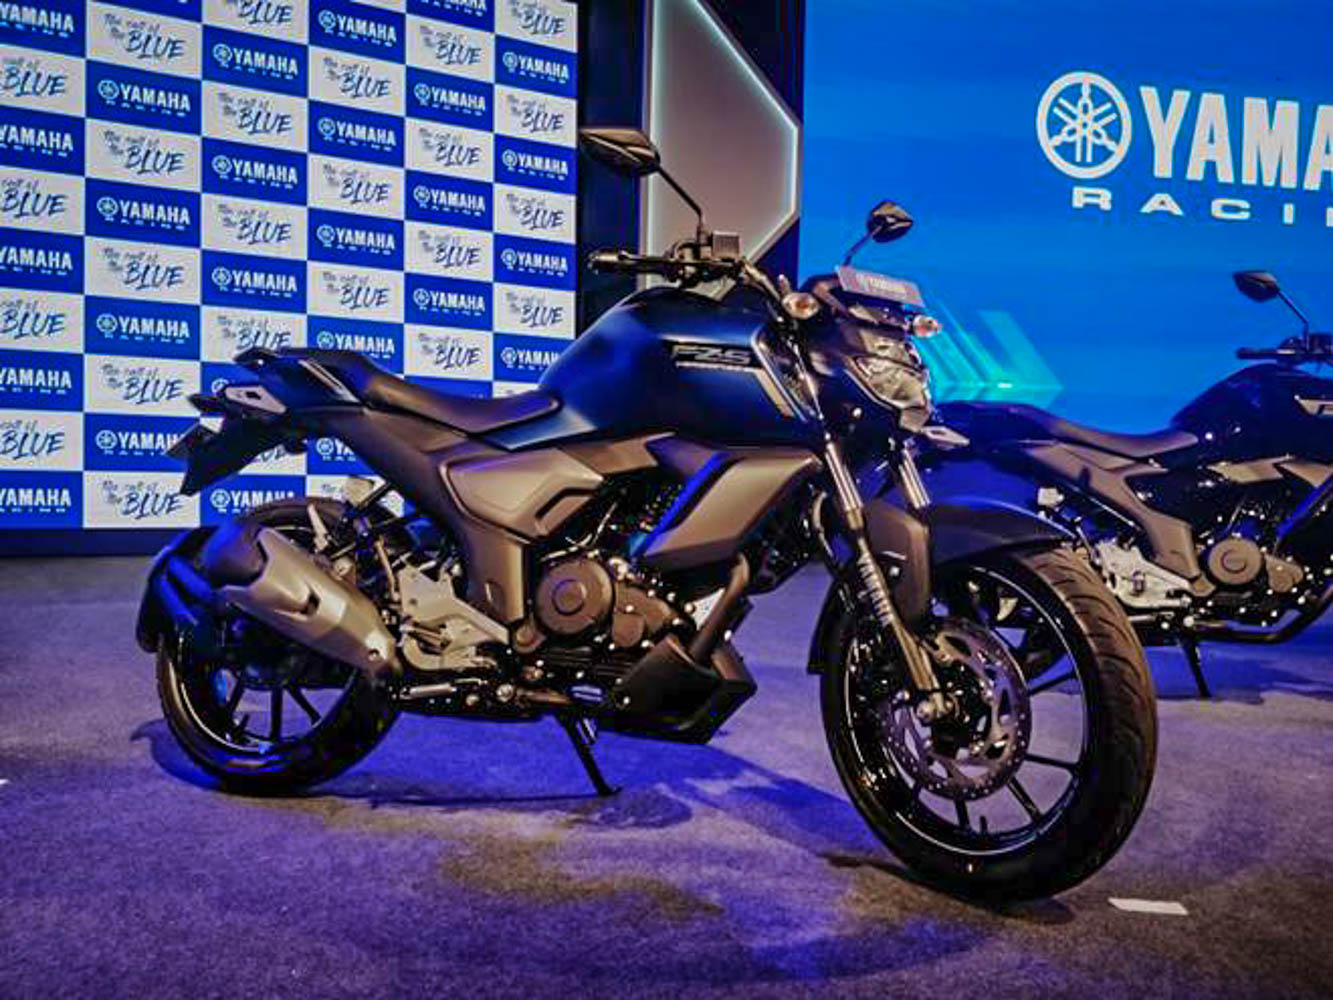 Yamaha India Resmi Merilis New Byson 2019 Facelift Yang Kini Sudah